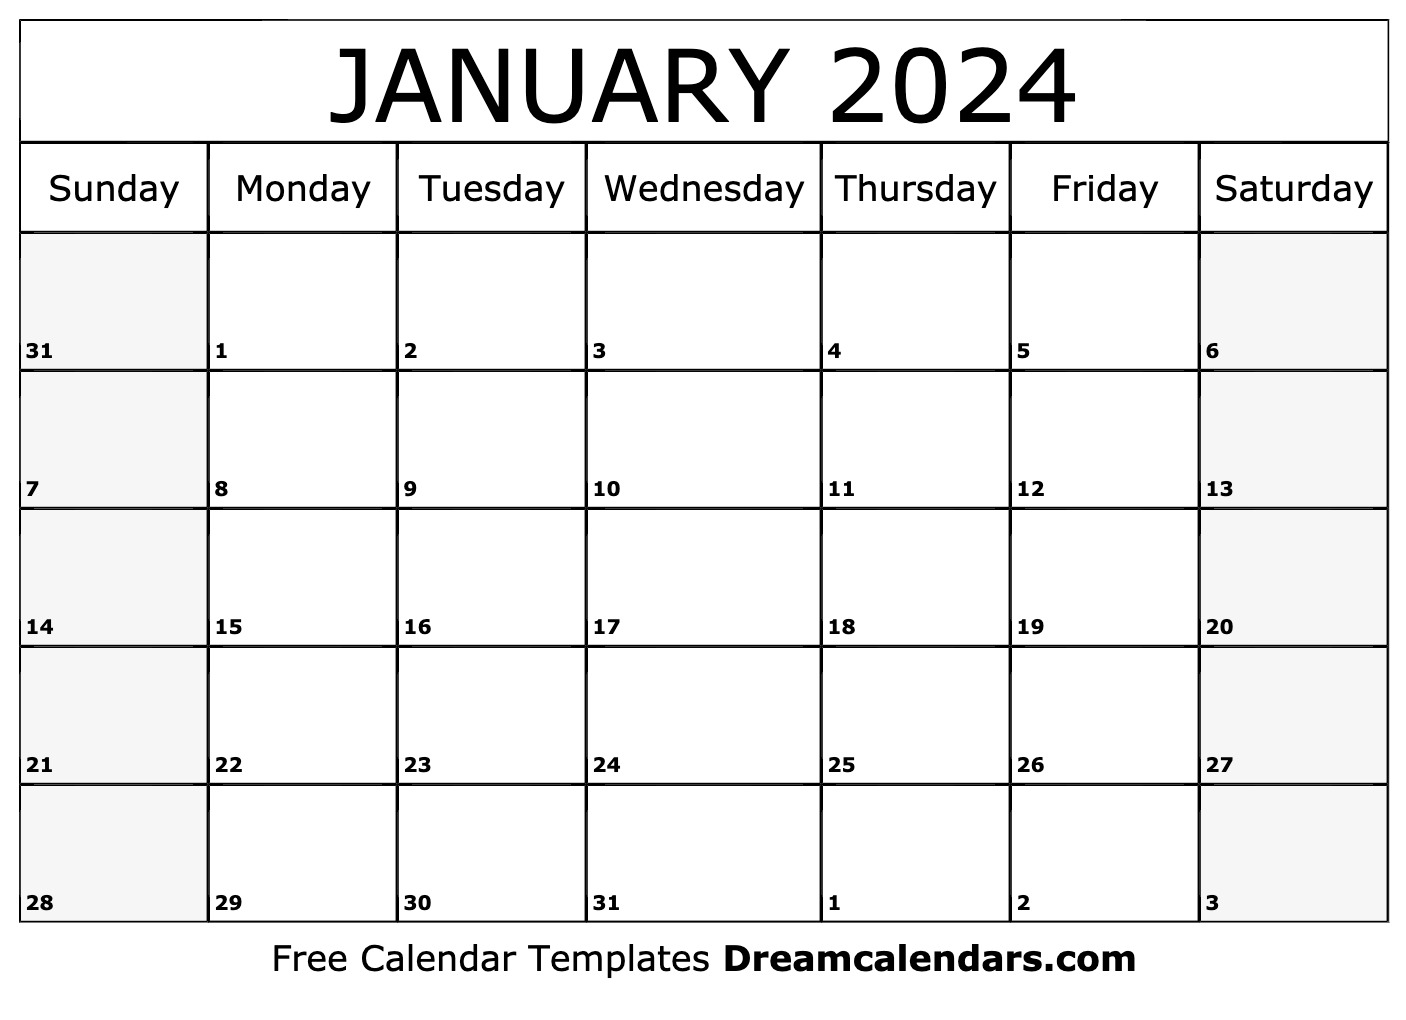 january-2024-calendar-free-blank-printable-with-holidays